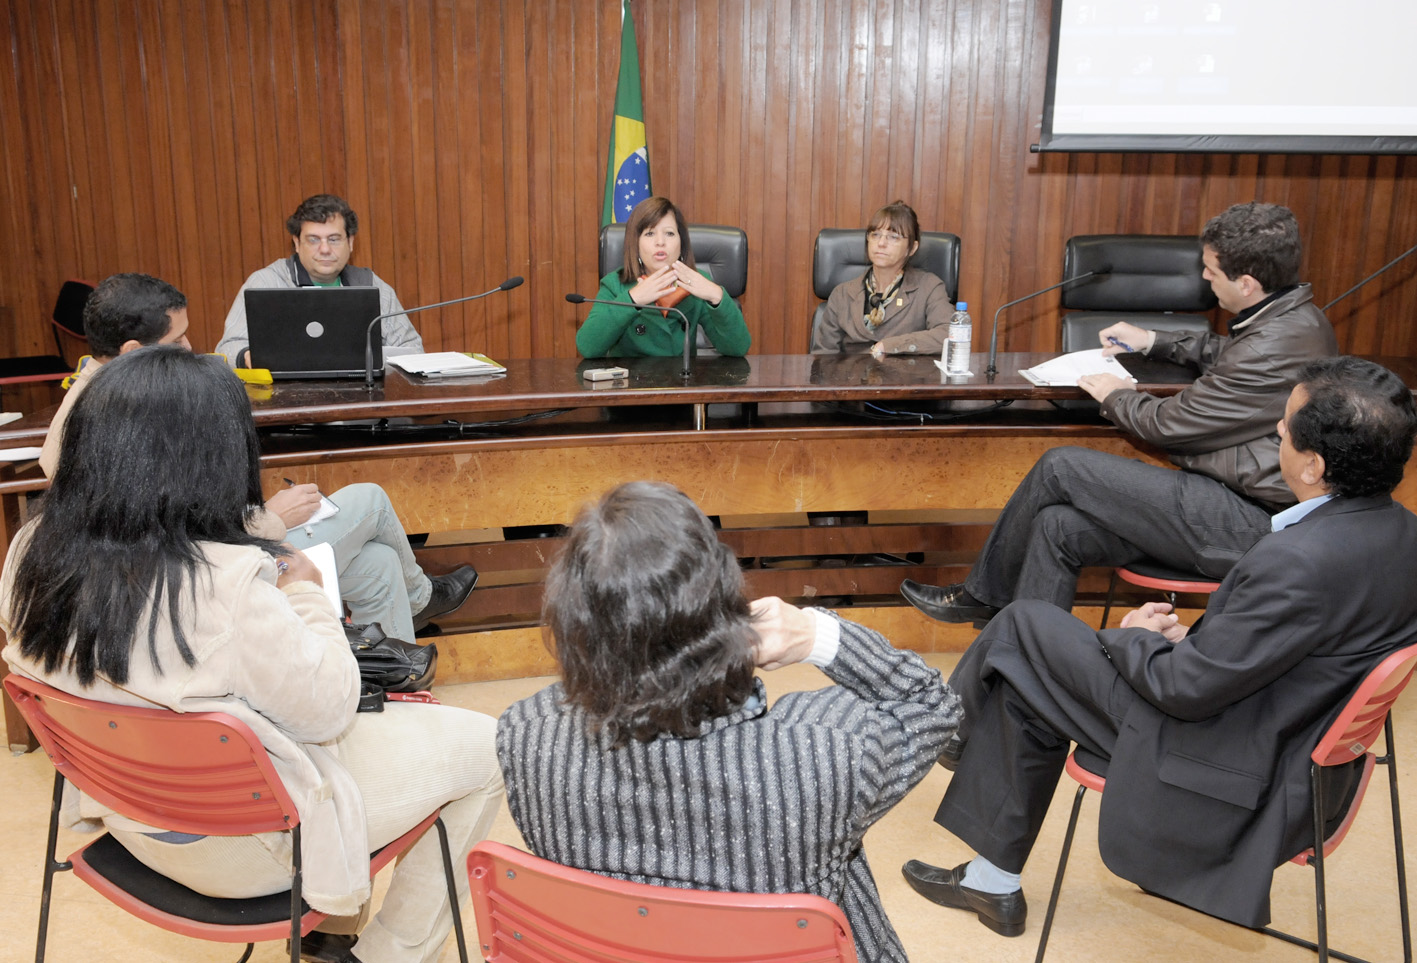 Debate com ambientalistas no Instituto do Legislativo Paulista<a style='float:right;color:#ccc' href='https://www3.al.sp.gov.br/repositorio/noticia/06-2009/ILP - MAU_3234.jpg' target=_blank><i class='bi bi-zoom-in'></i> Clique para ver a imagem </a>